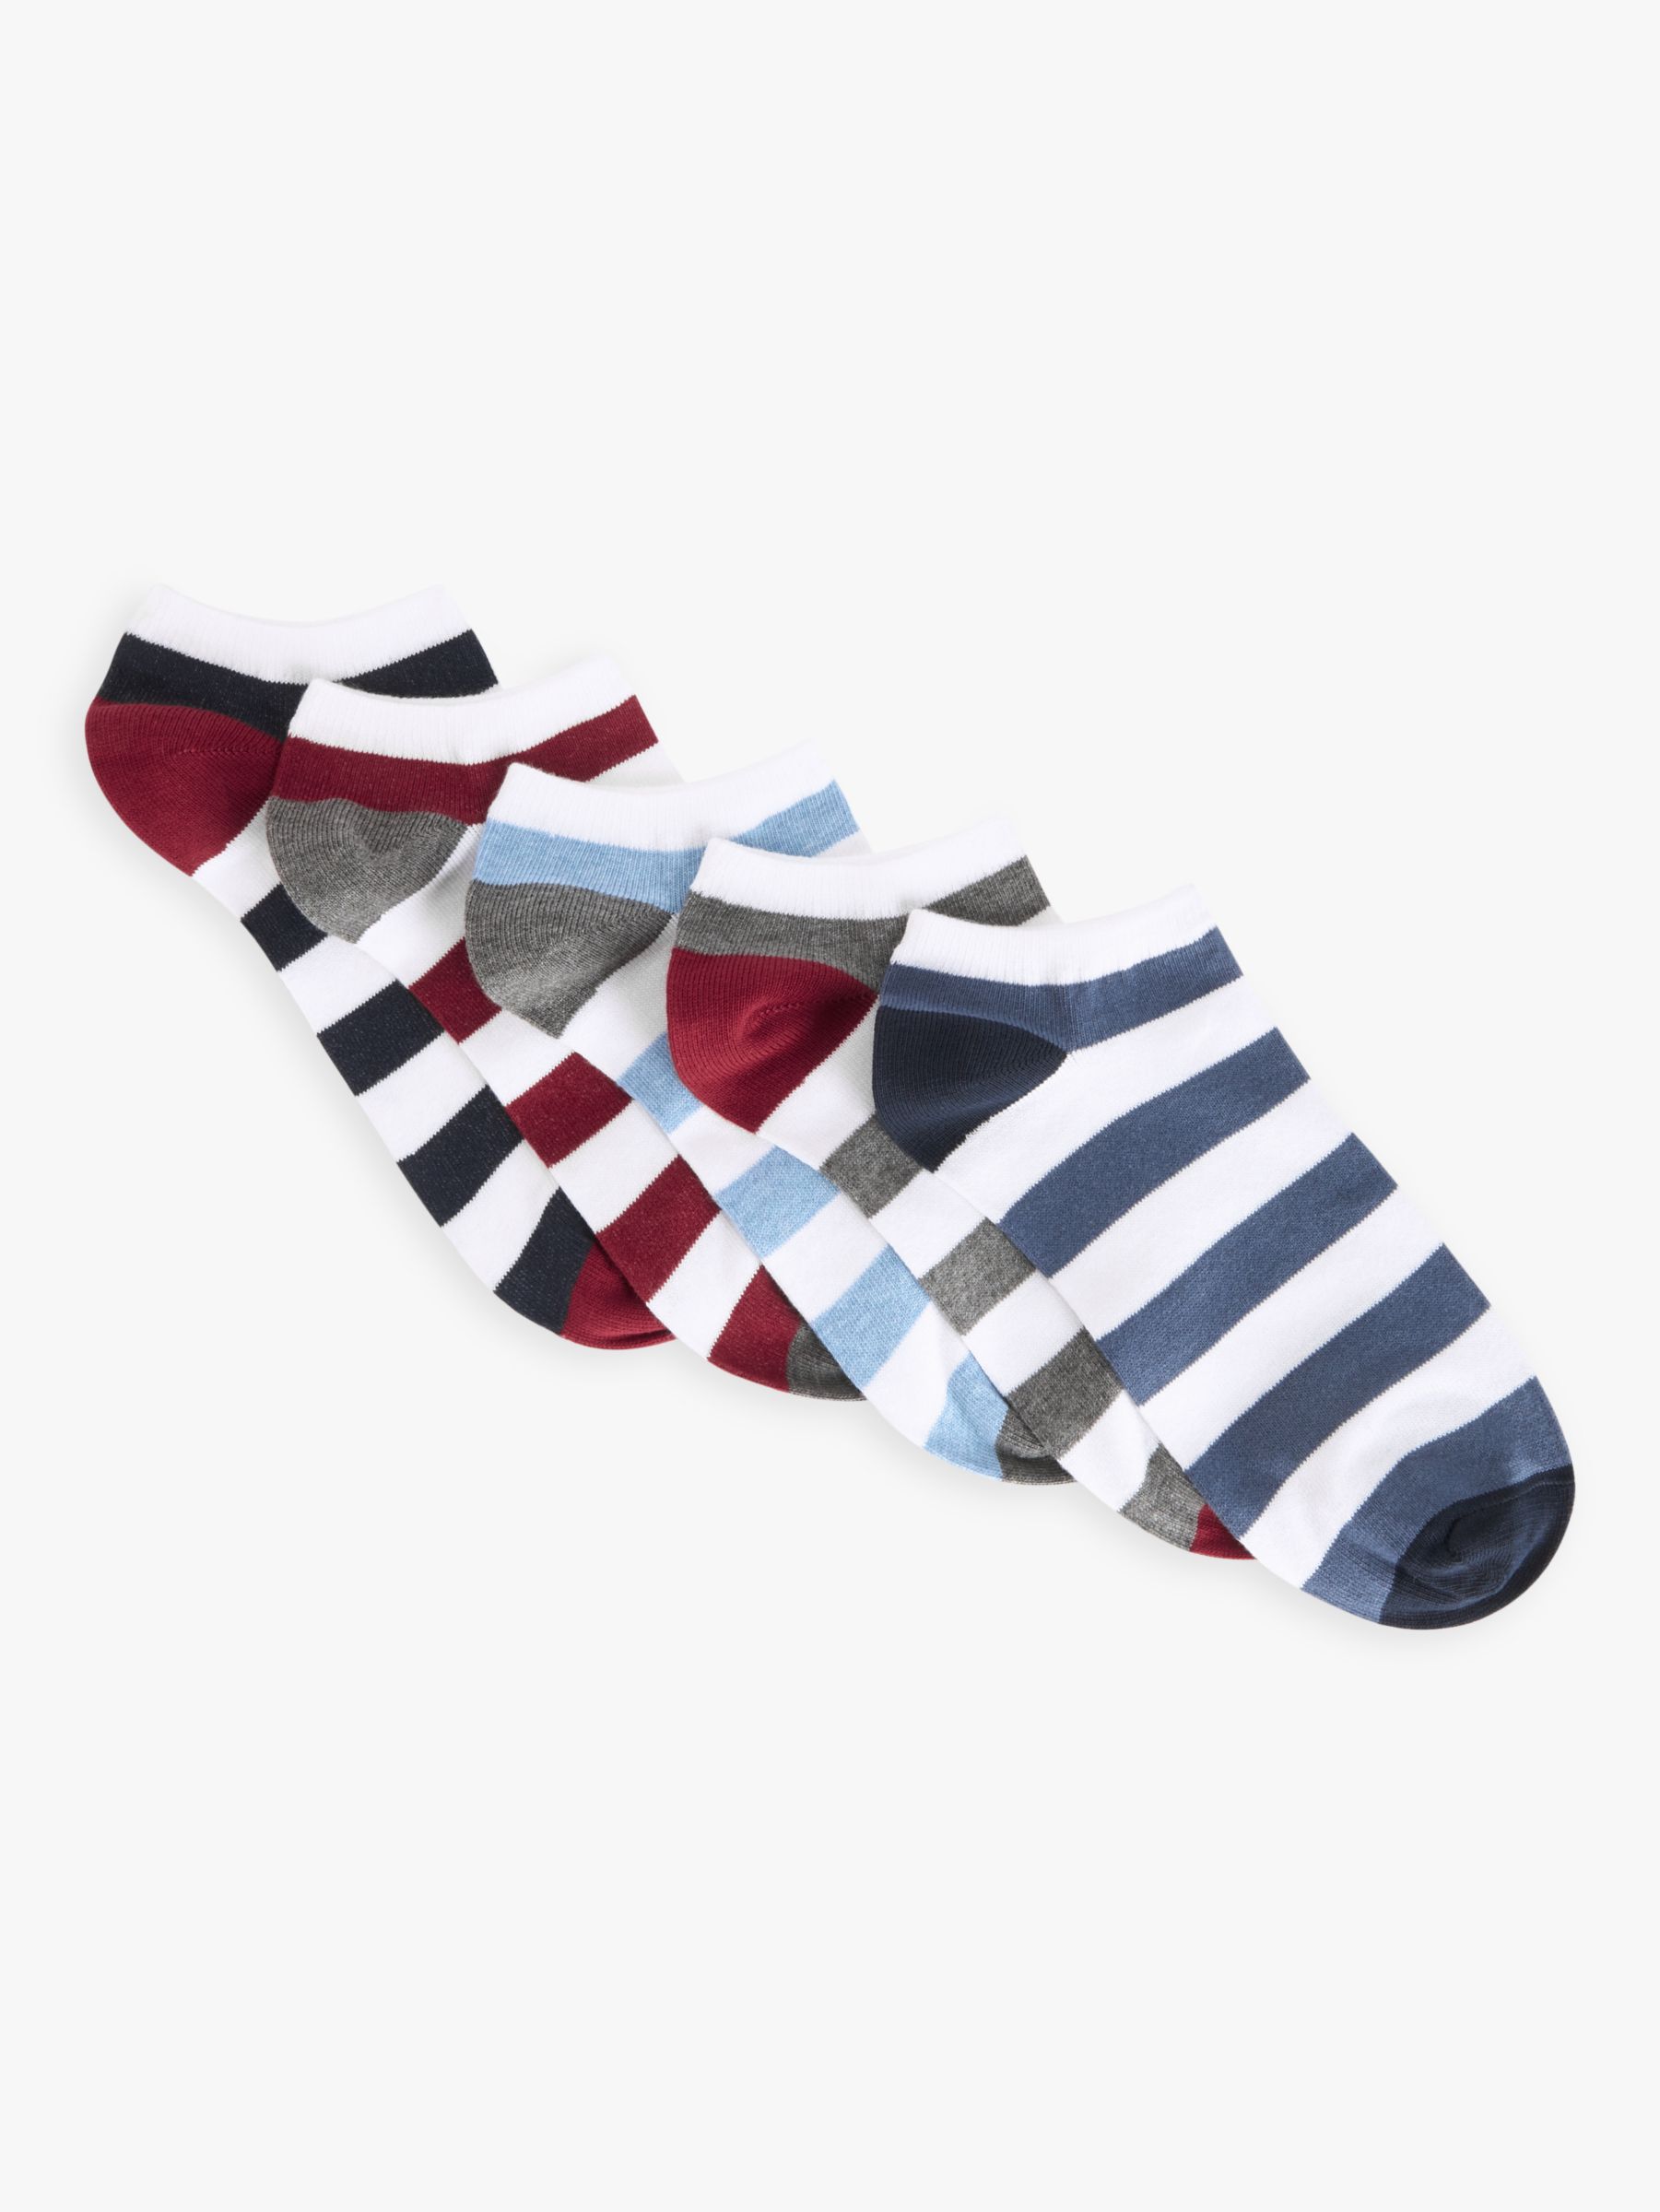 John Lewis Rugby Stripe Trainer Socks, Pack of 5, Black/Red/Blue/Grey, S-M